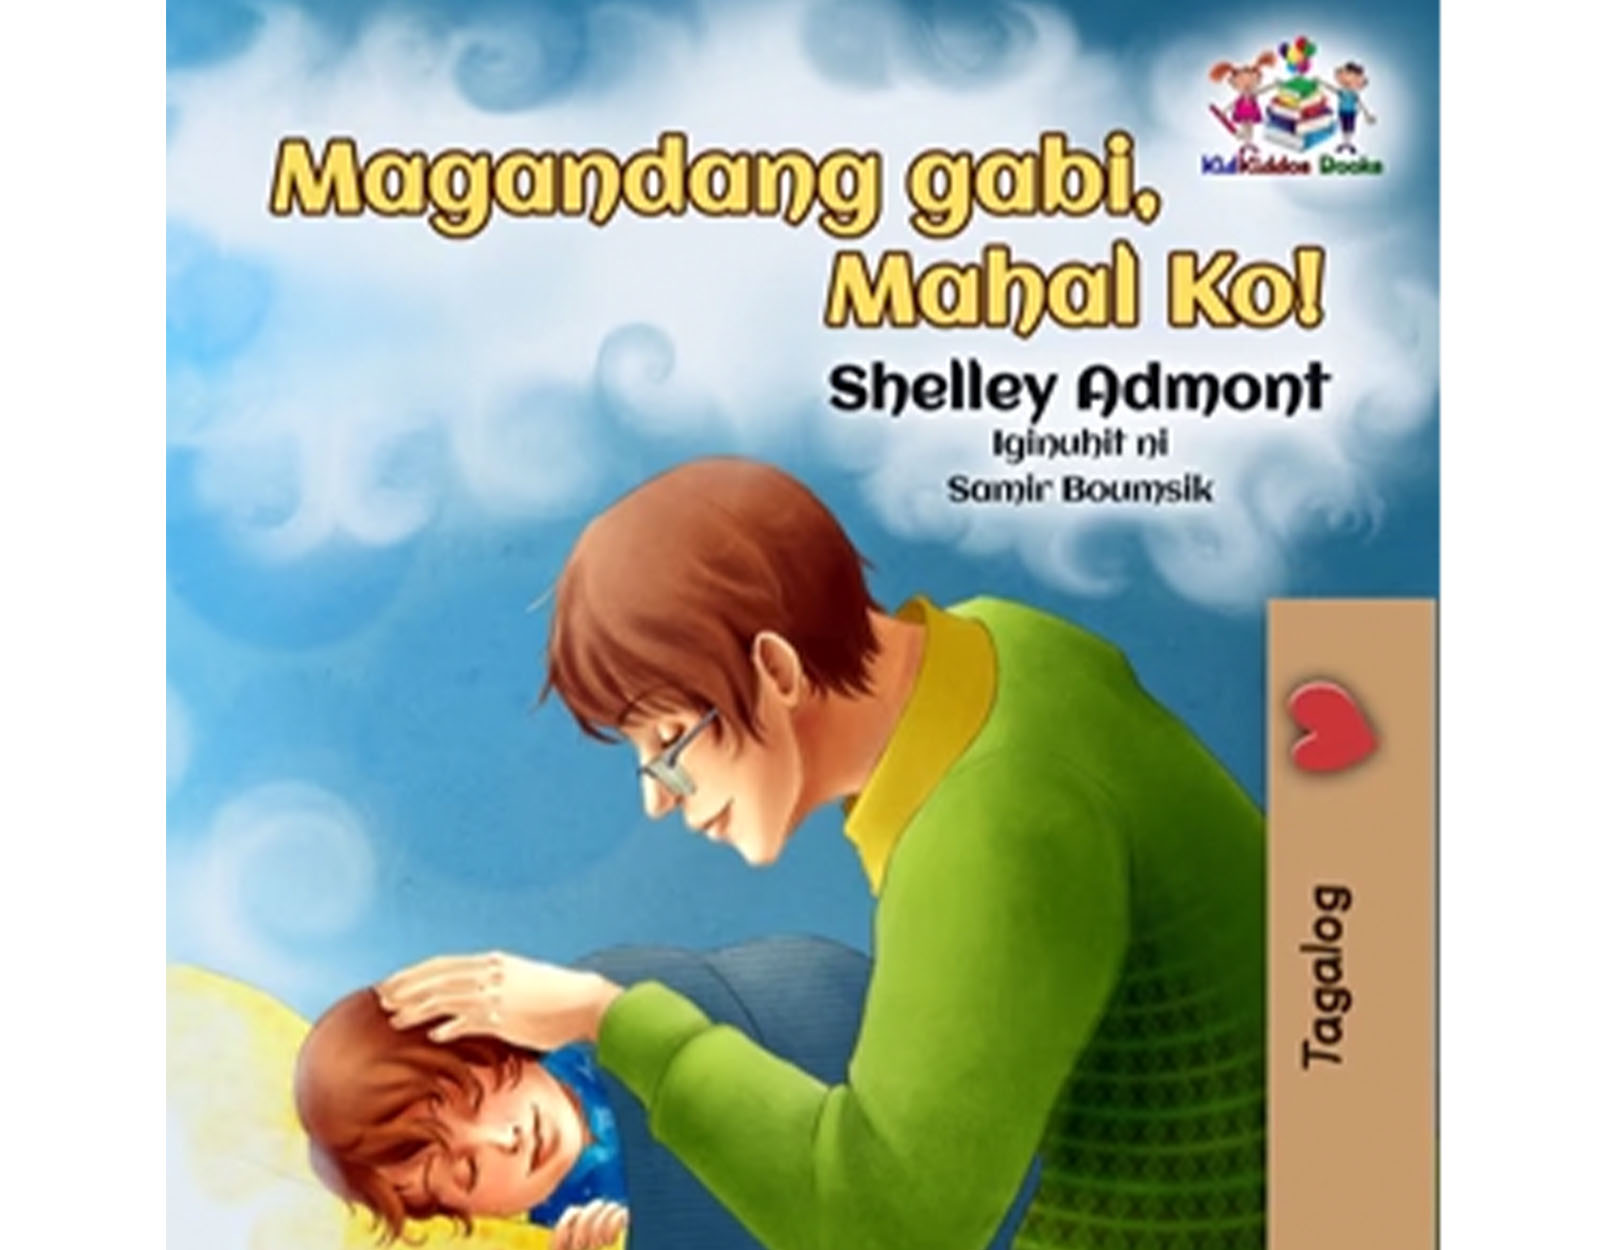 Tagalog Stories for Kids: Magandang Gabi, Mahal Ko!